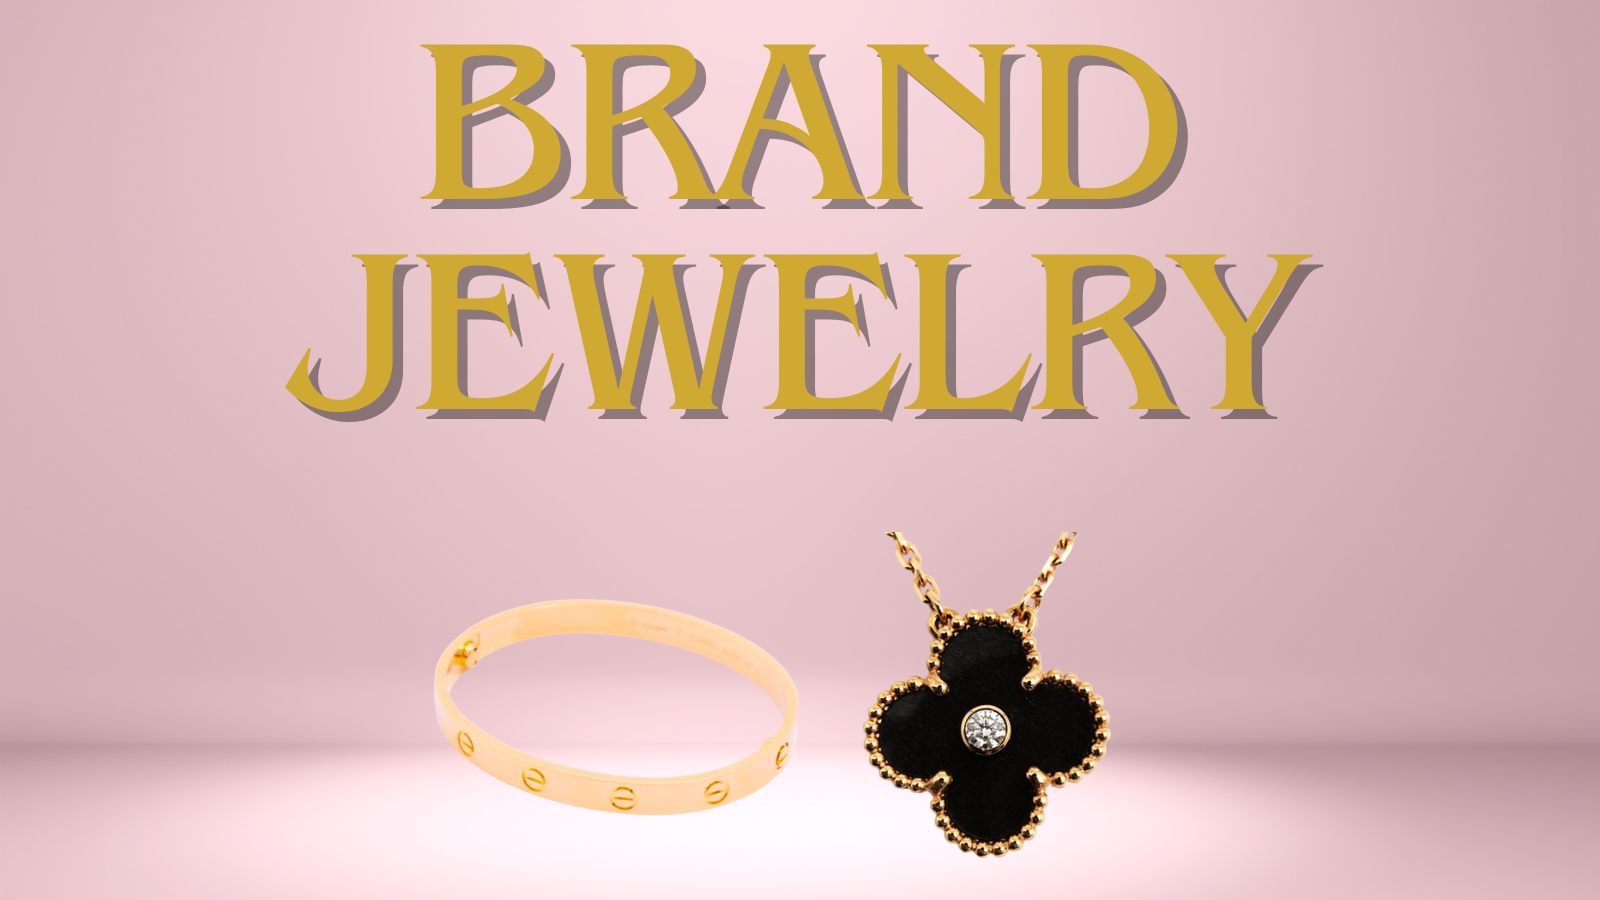 brand jewelry